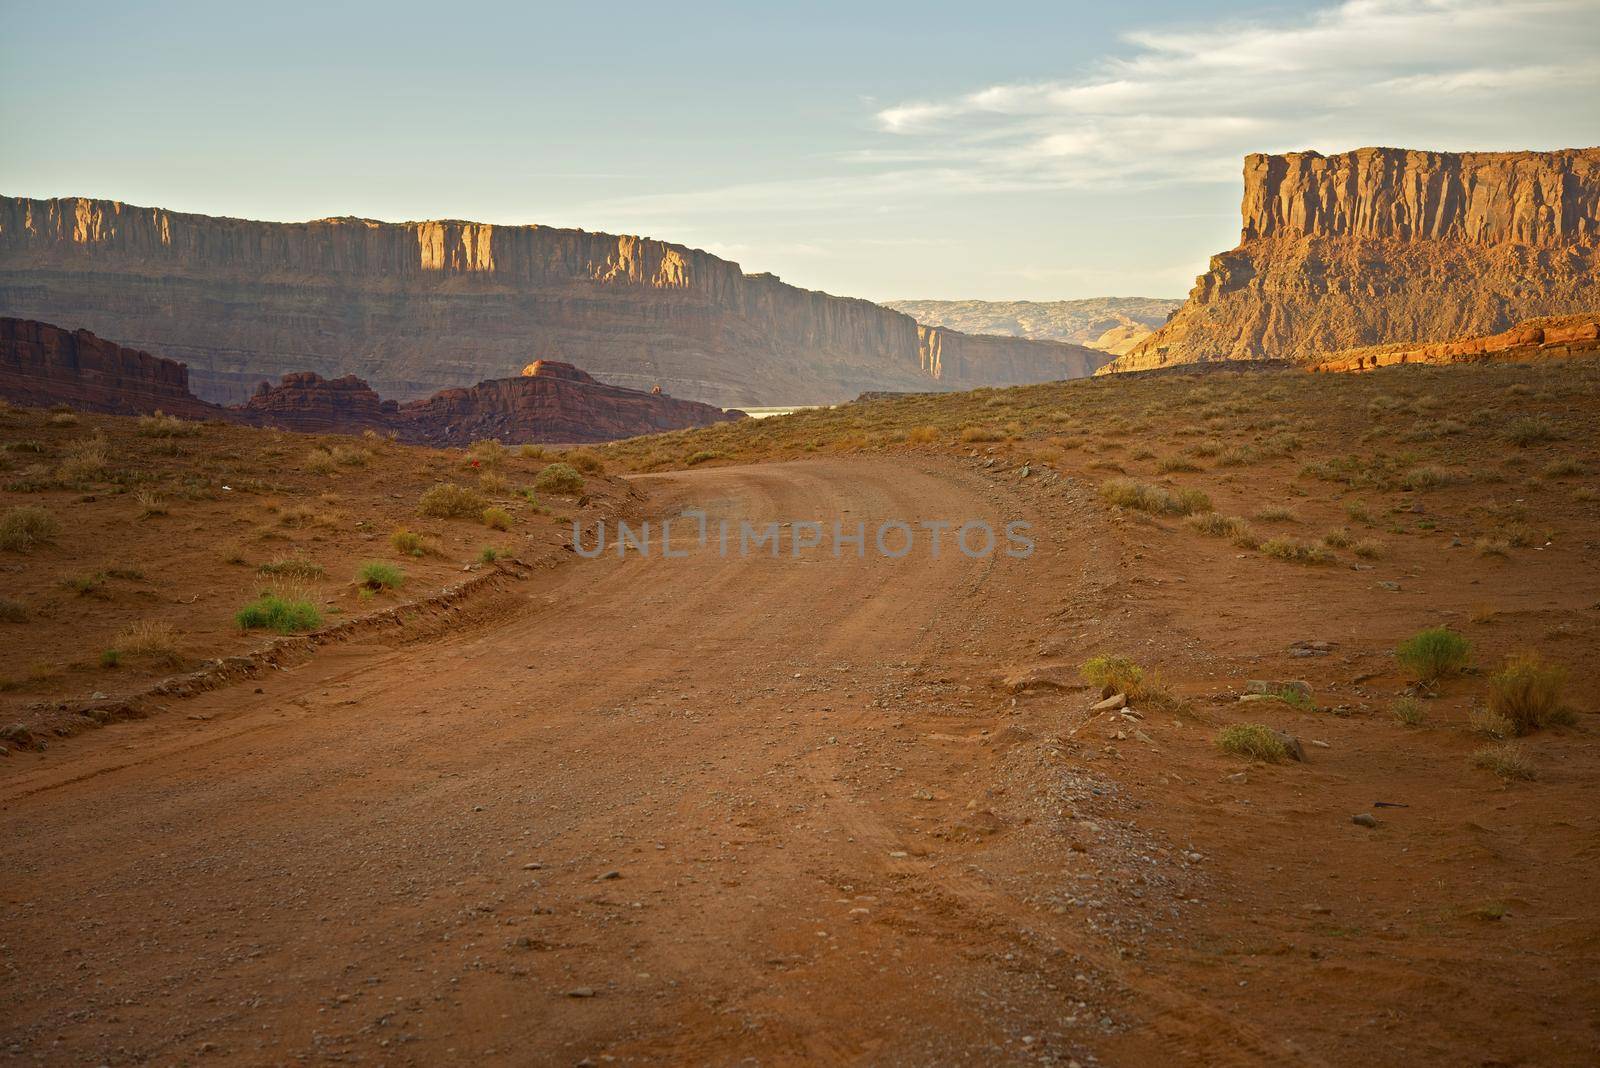 Raw Utah Desert Landscape - Sandy Backcountry Road near Moab, Utah, USA.  by welcomia